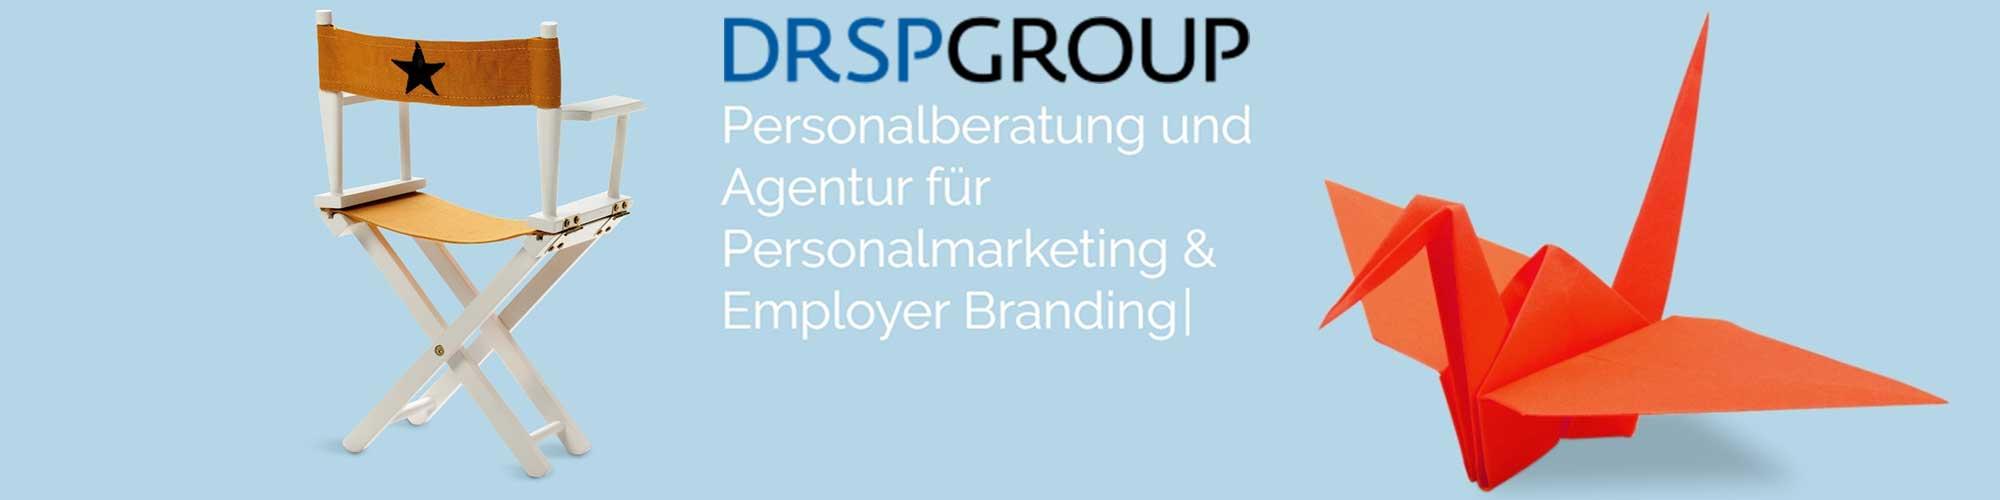 DRSP Group